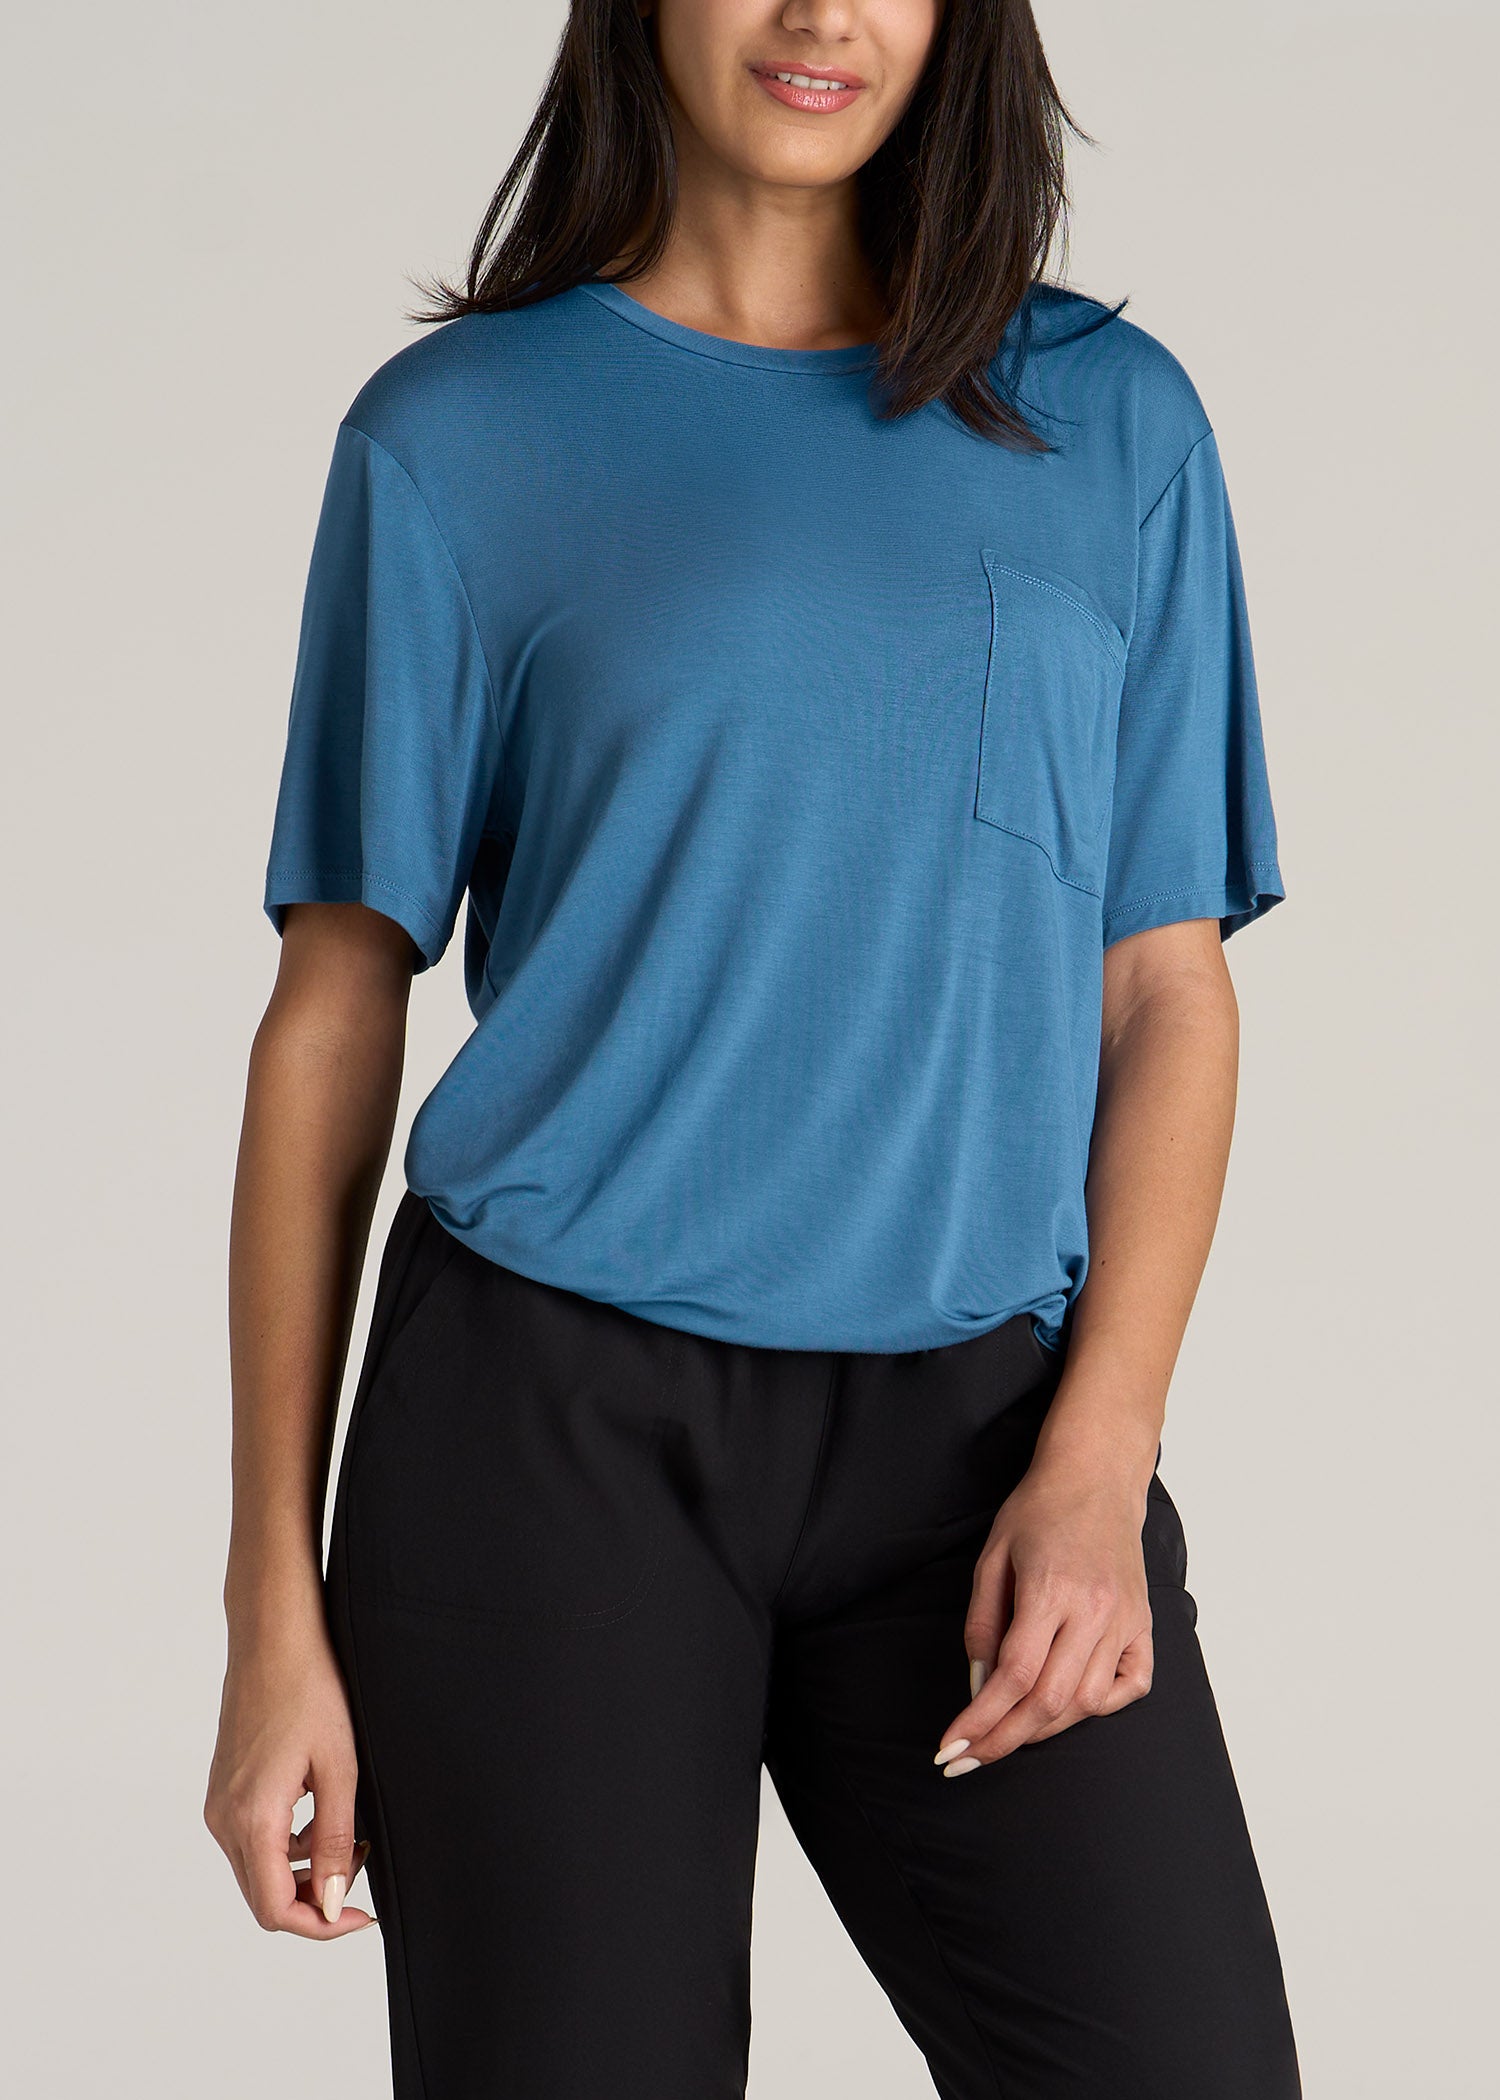 Lululemon Active T-Shirt Women's 12 Blue Short Sleeve Back Pocket Logo Gym  Yoga